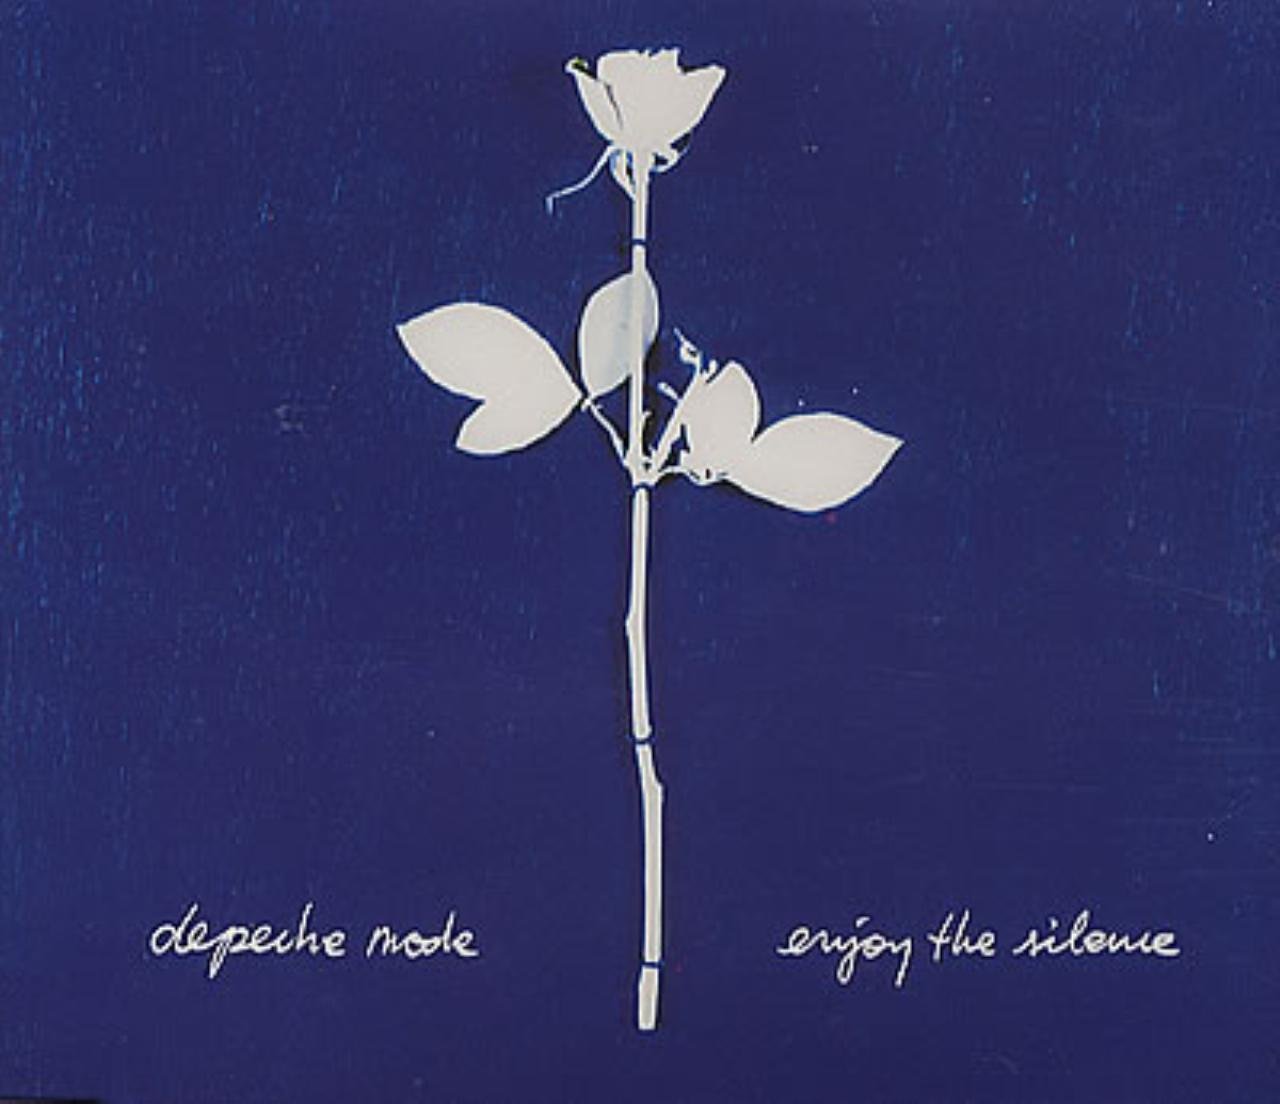 Depeche Mode - Enjoy the silence (Cover)